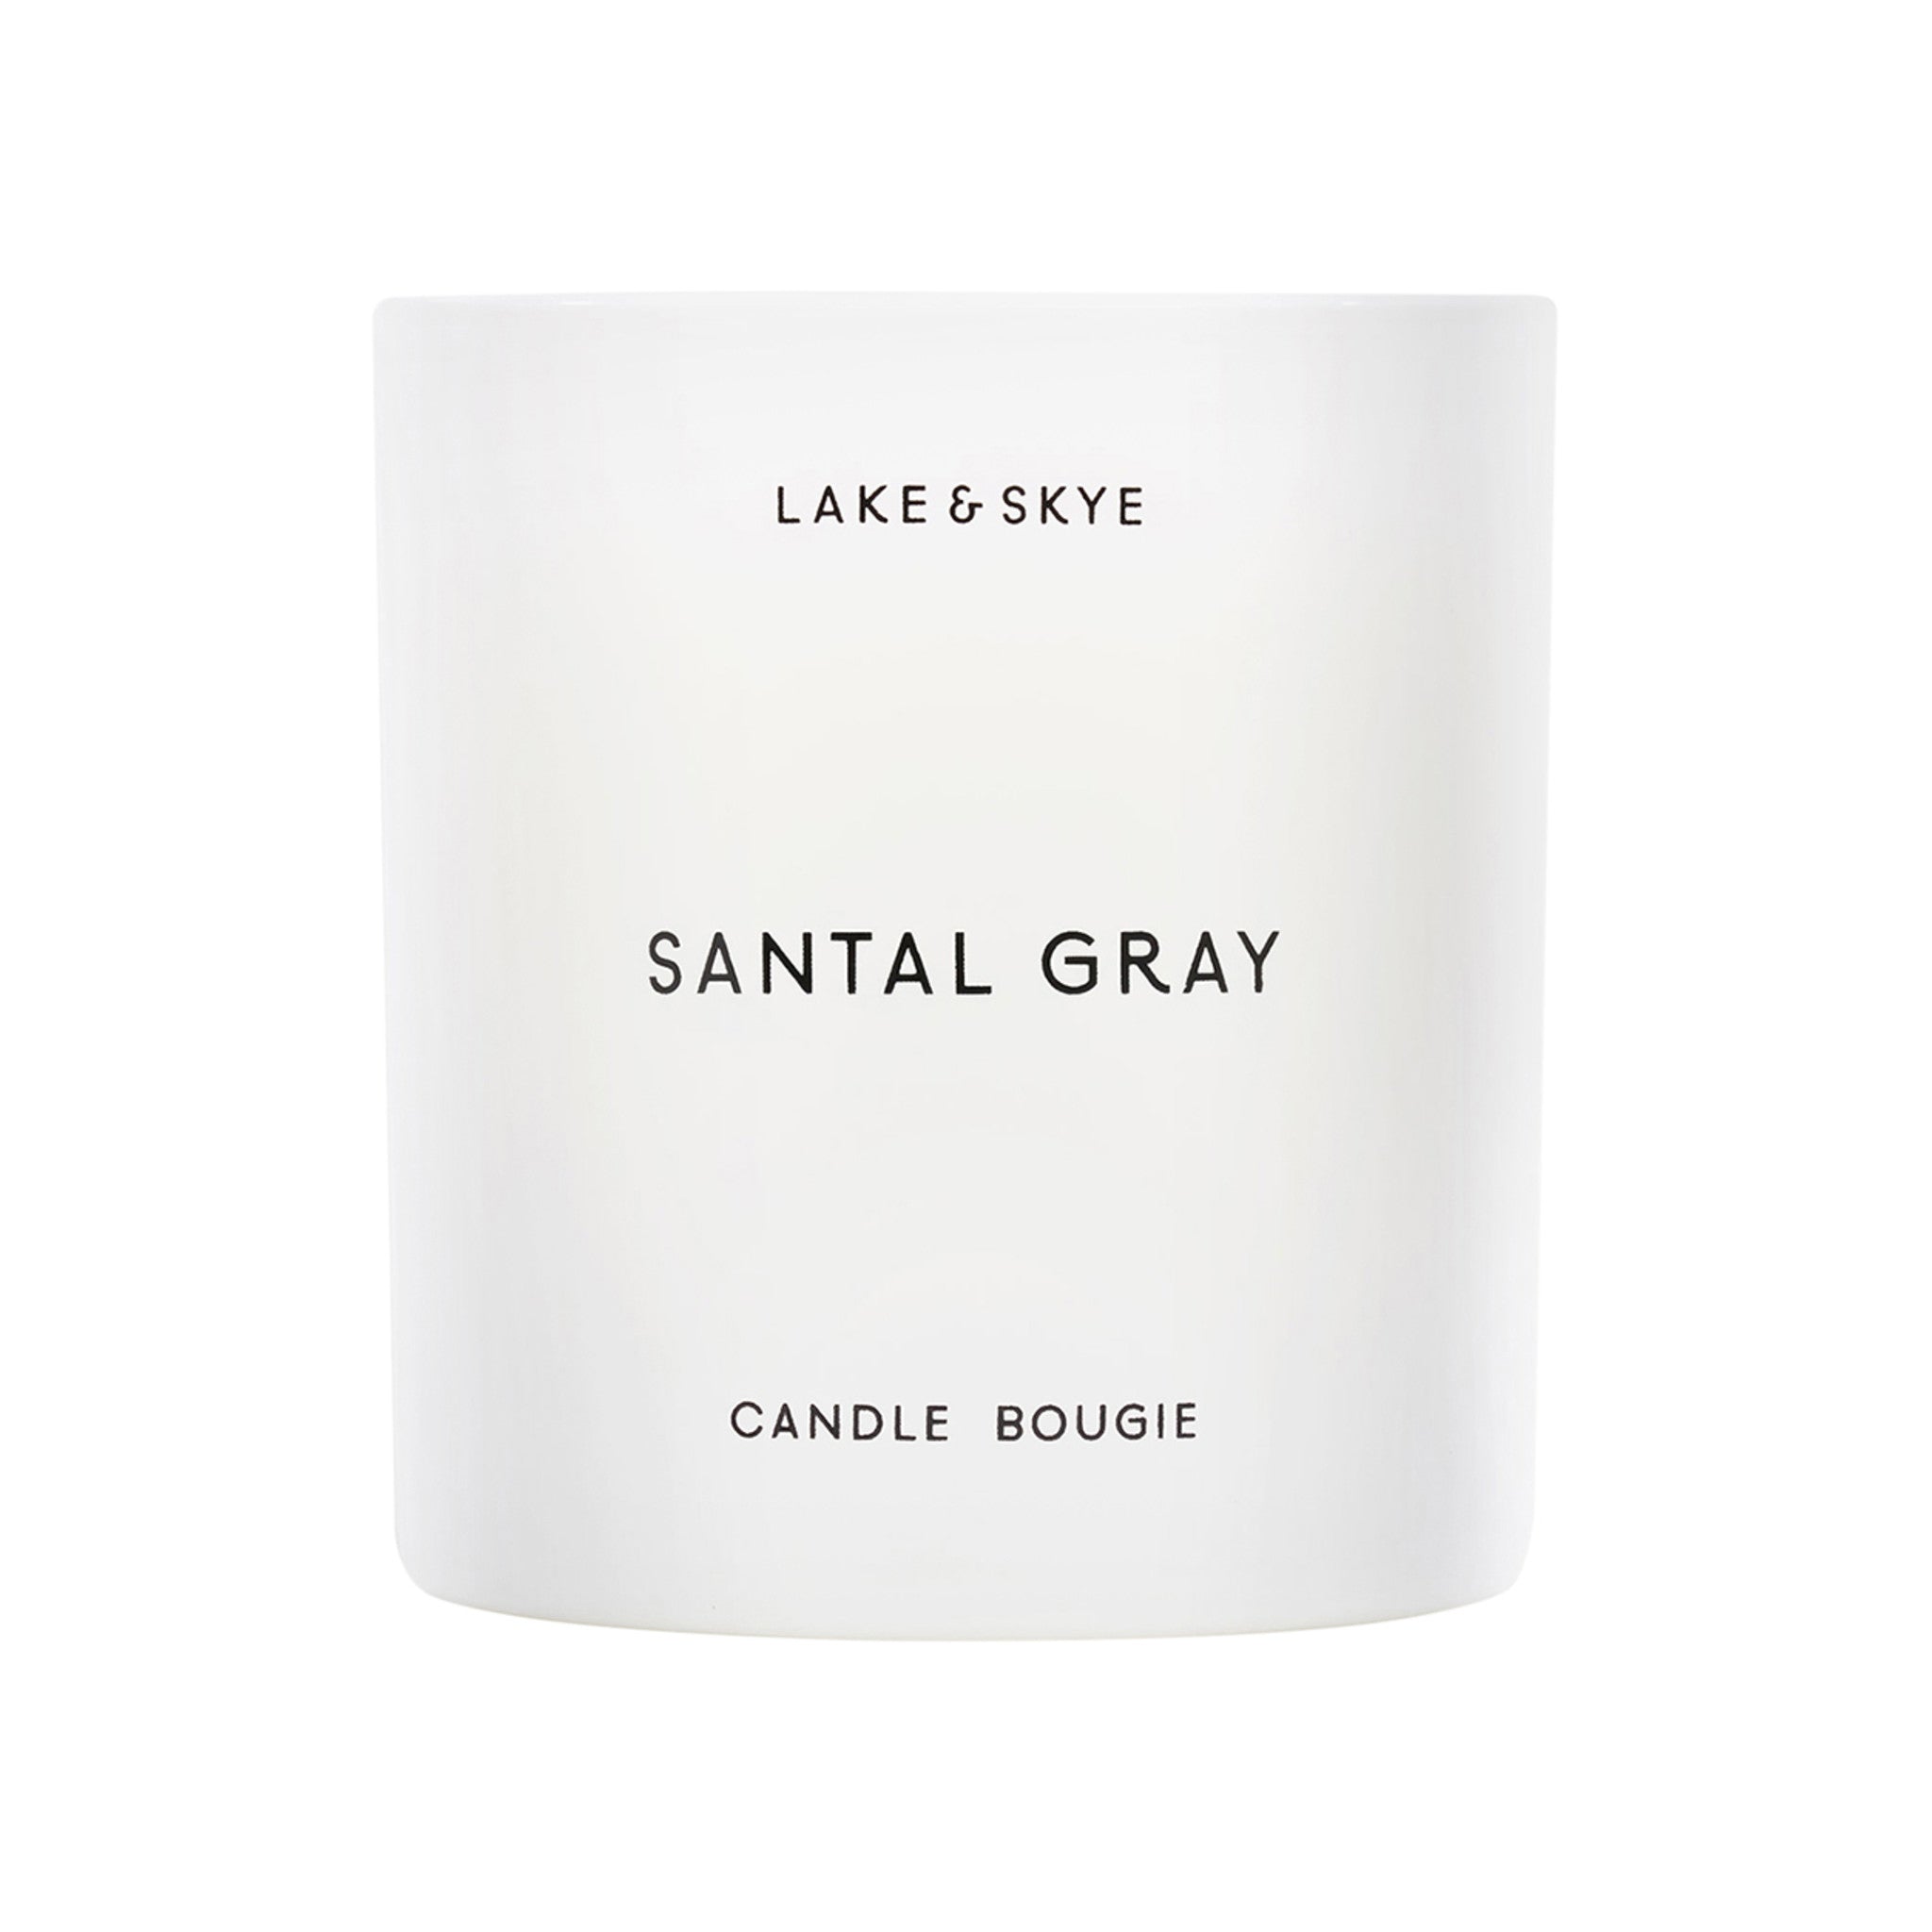 Lake & Skye Santal Gray Candle main image.